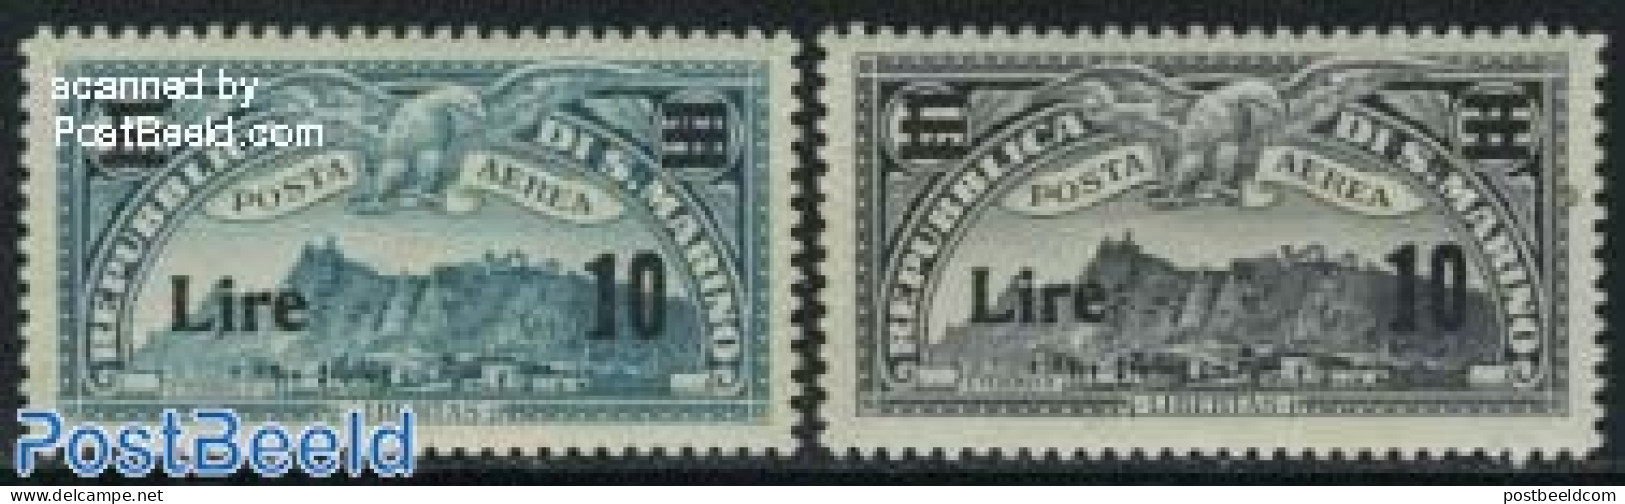 San Marino 1942 Airmail Overprints 2v, Mint NH, Nature - Birds - Birds Of Prey - Unused Stamps